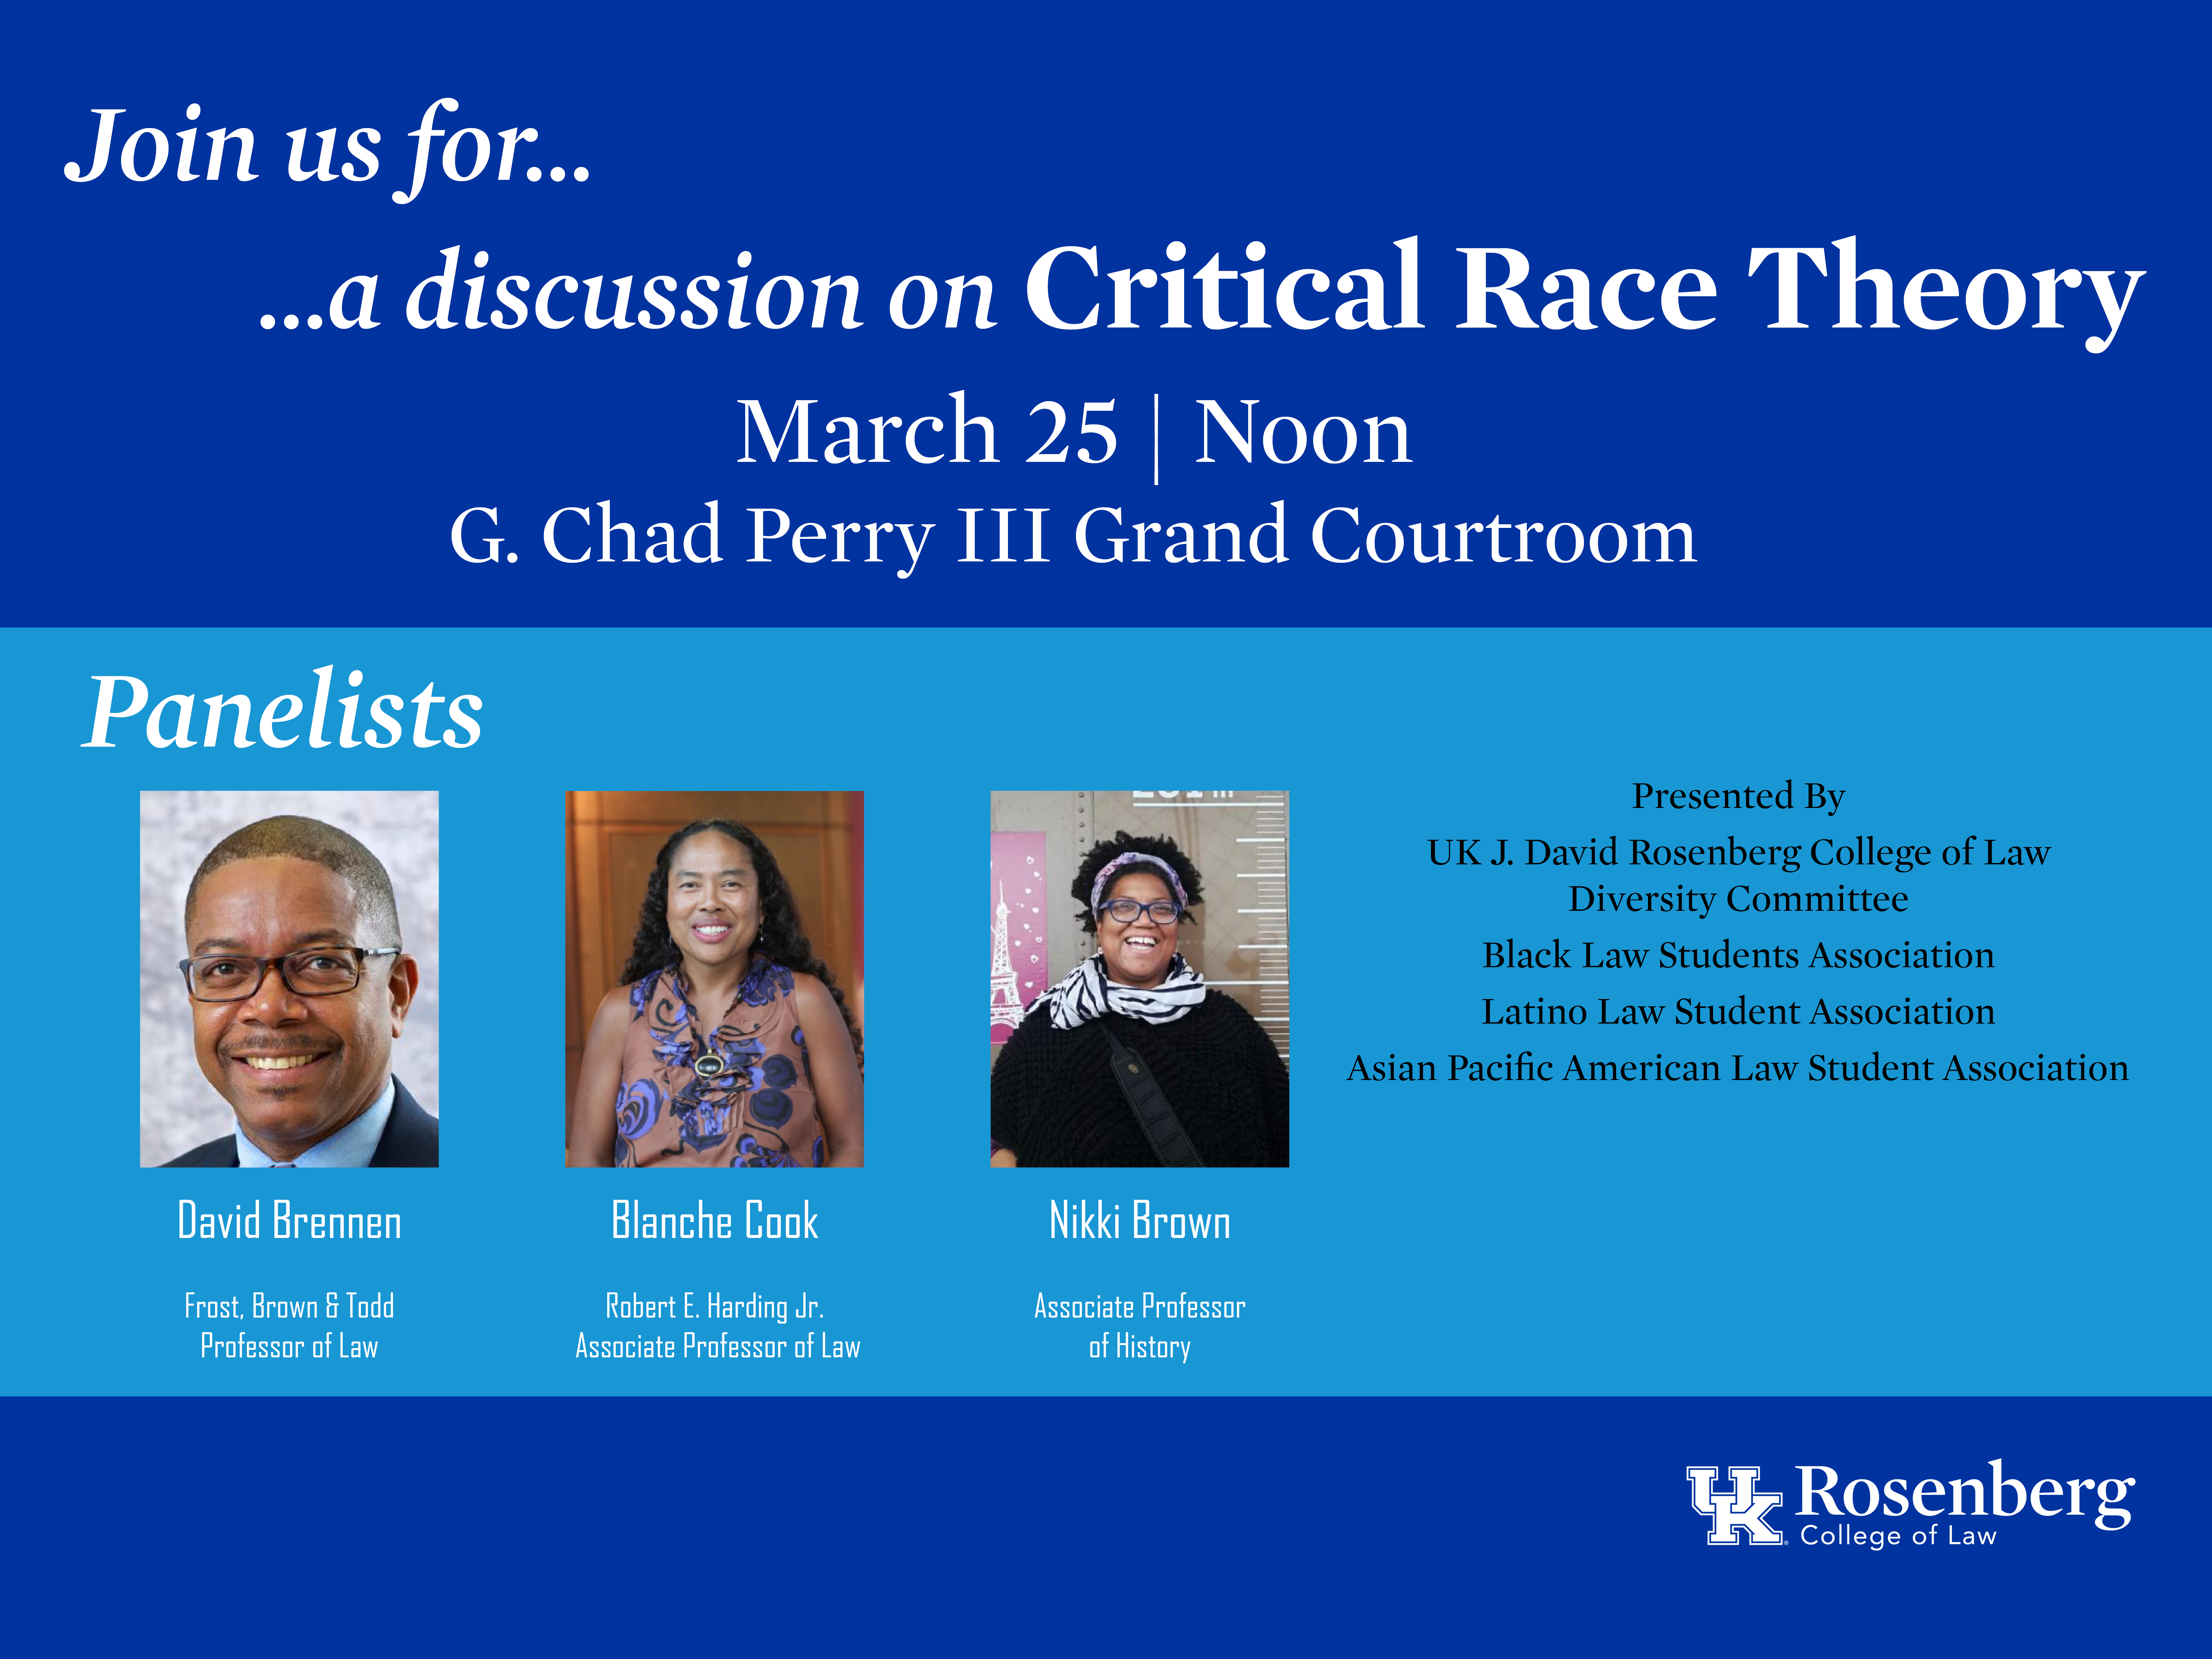 Uk Rosenberg Law Diversity Committee Panel On Critical Race Theory J David Rosenberg College